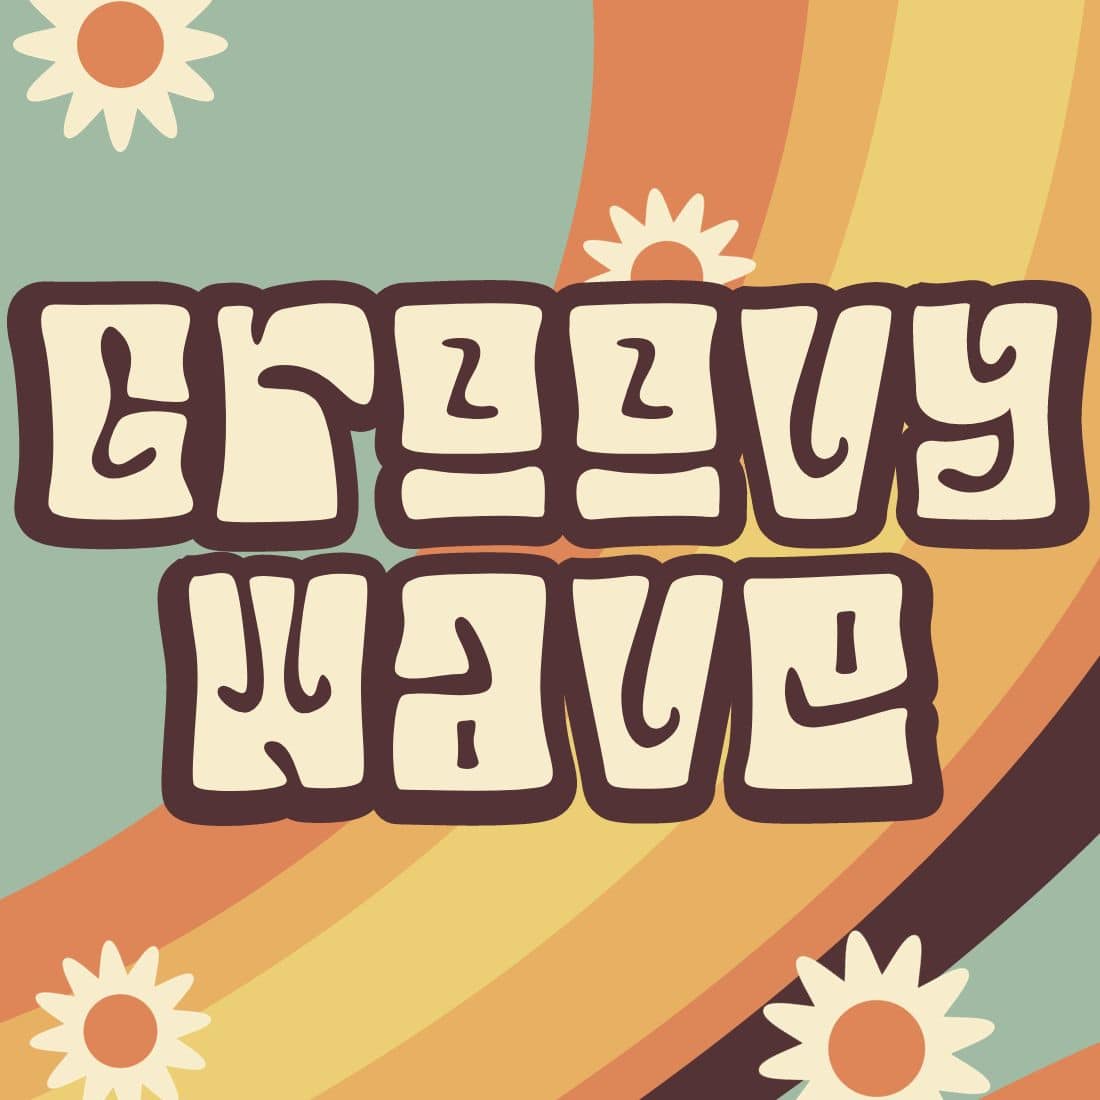 GroovyWave - Retro Font cover image.